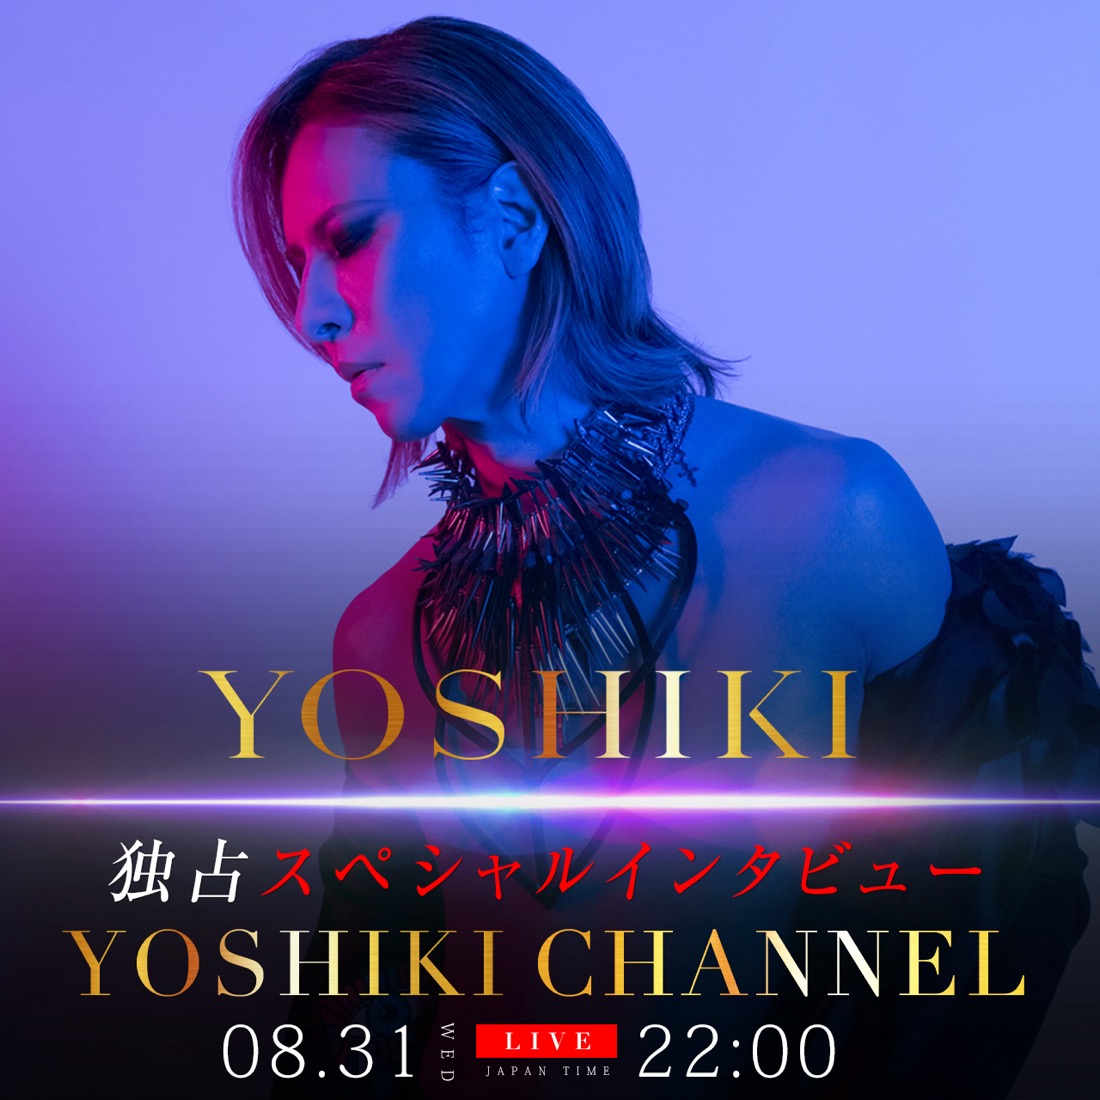 『YOSHIKI CHANNEL』にて、YOSHIKIへの独占スペシャルインタビューが実現 - 画像一覧（1/1）